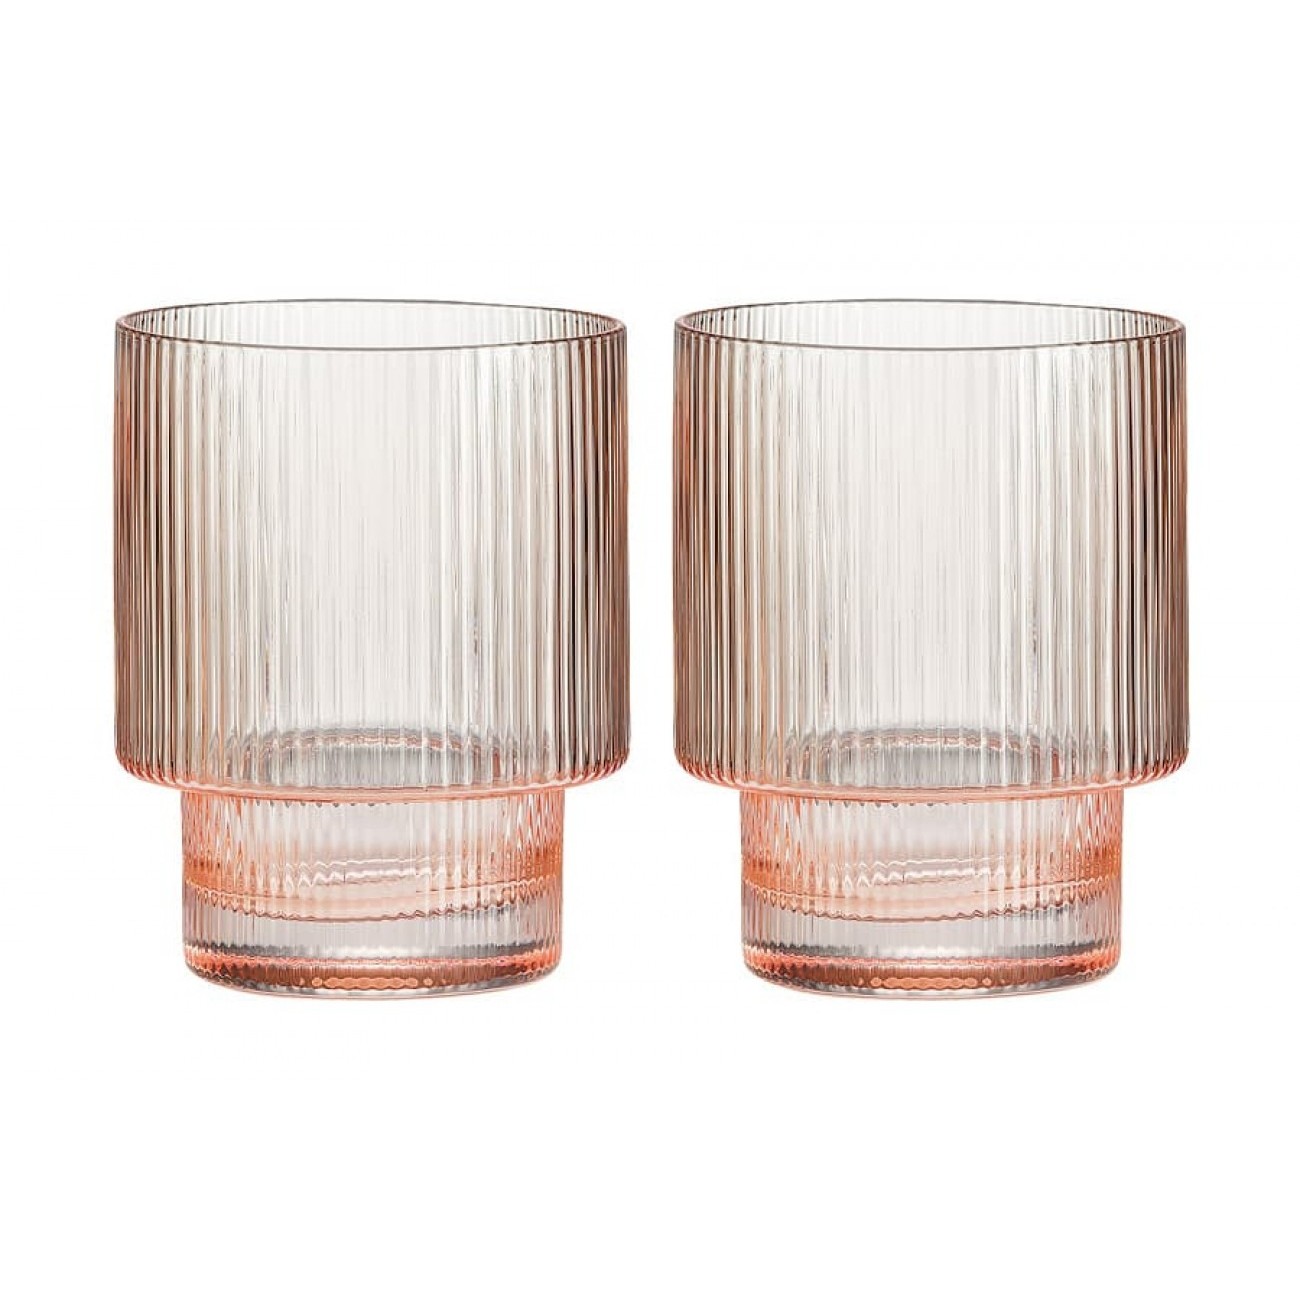 Набор стаканов Pozzi Milano 1876 Modern classic для воды розовый 0.32 л 2 предмета classic стаканы для воды 2 шт